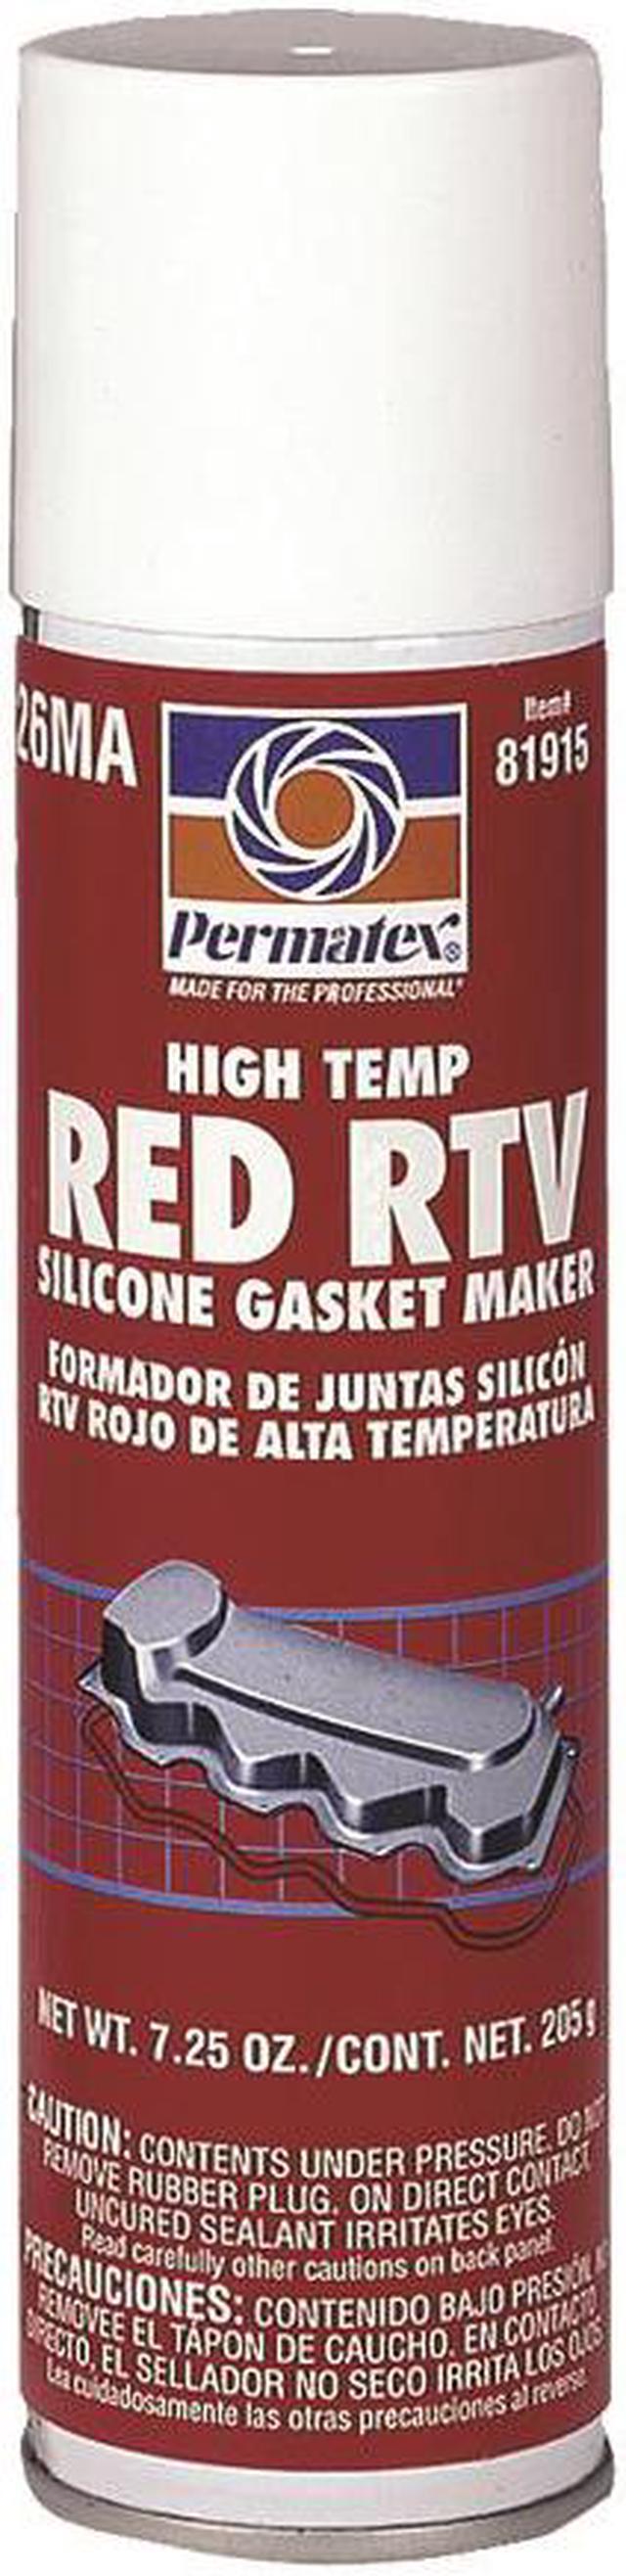 PERMATEX, High-Temp Red RTV, 7.25 oz, RTV Gasket Maker